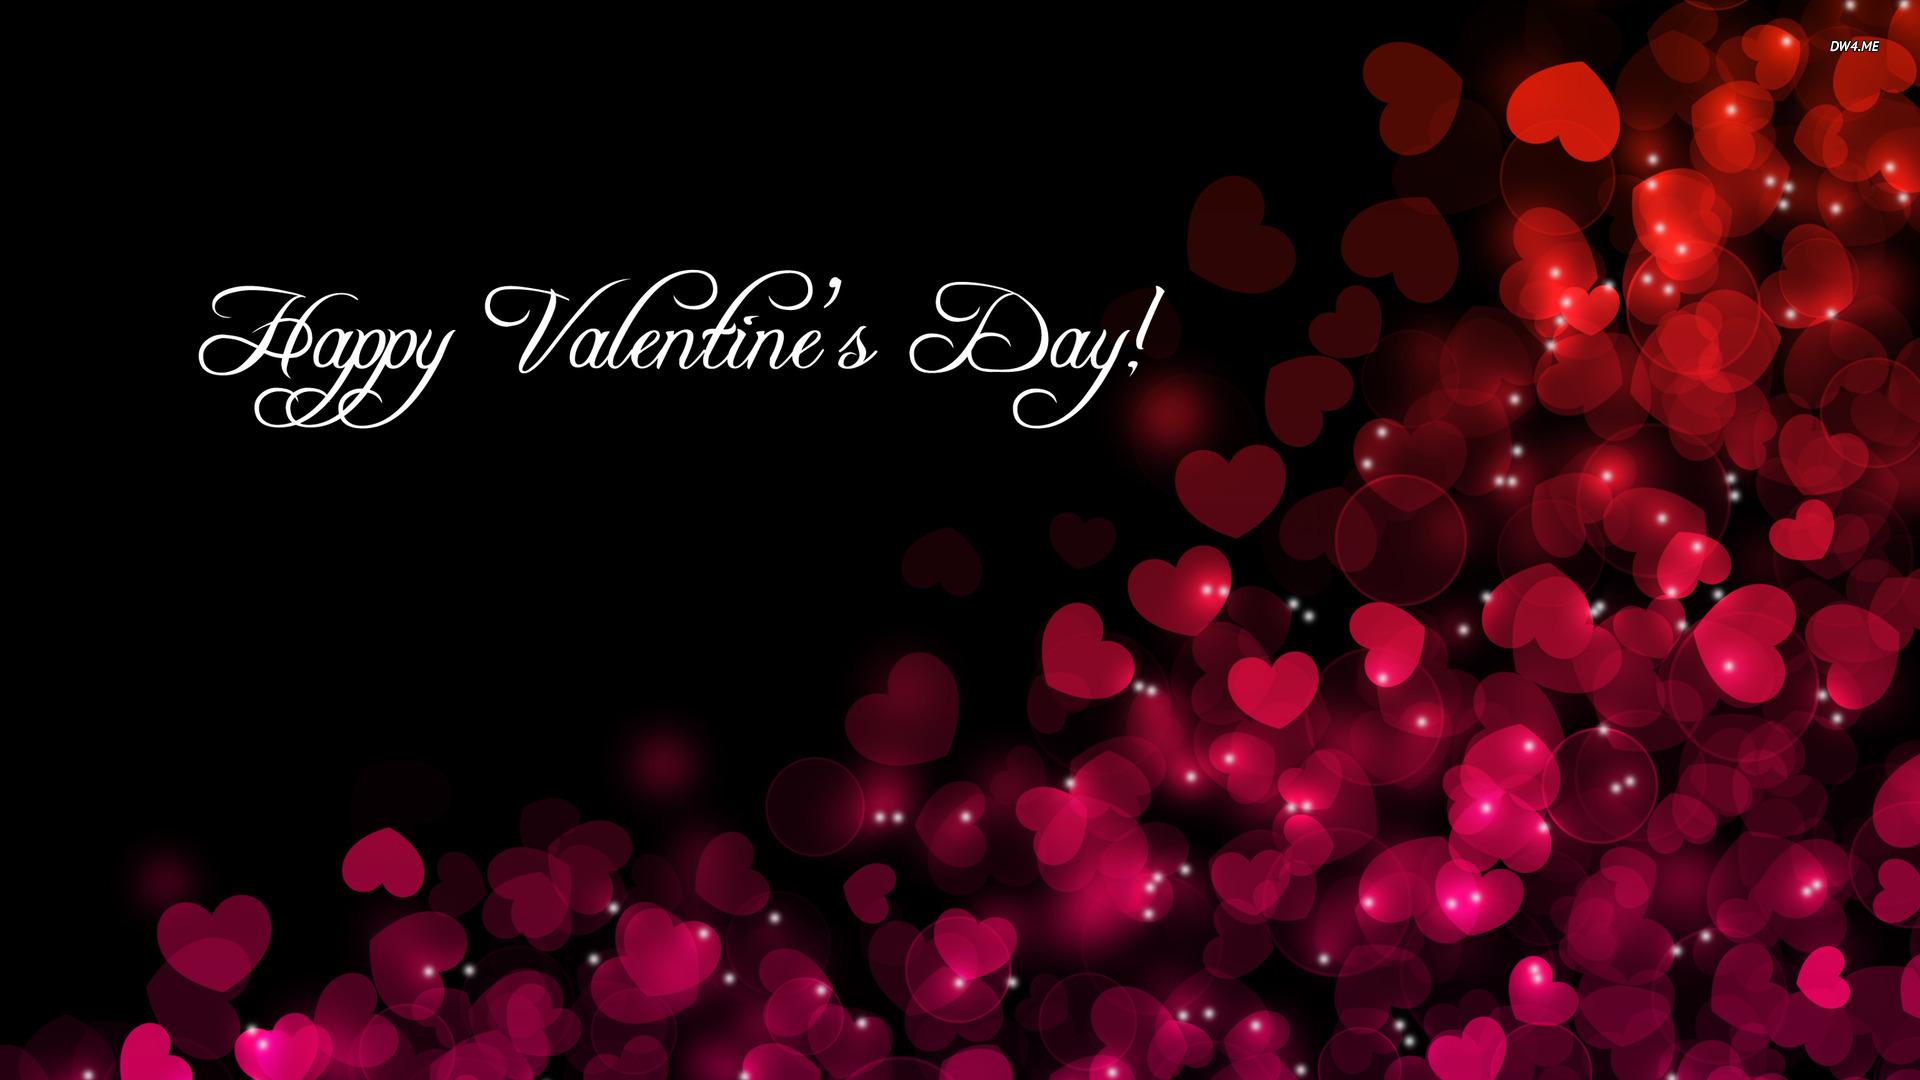 Happy Valentines Day HD Desktop Wallpaper Backgrounds download